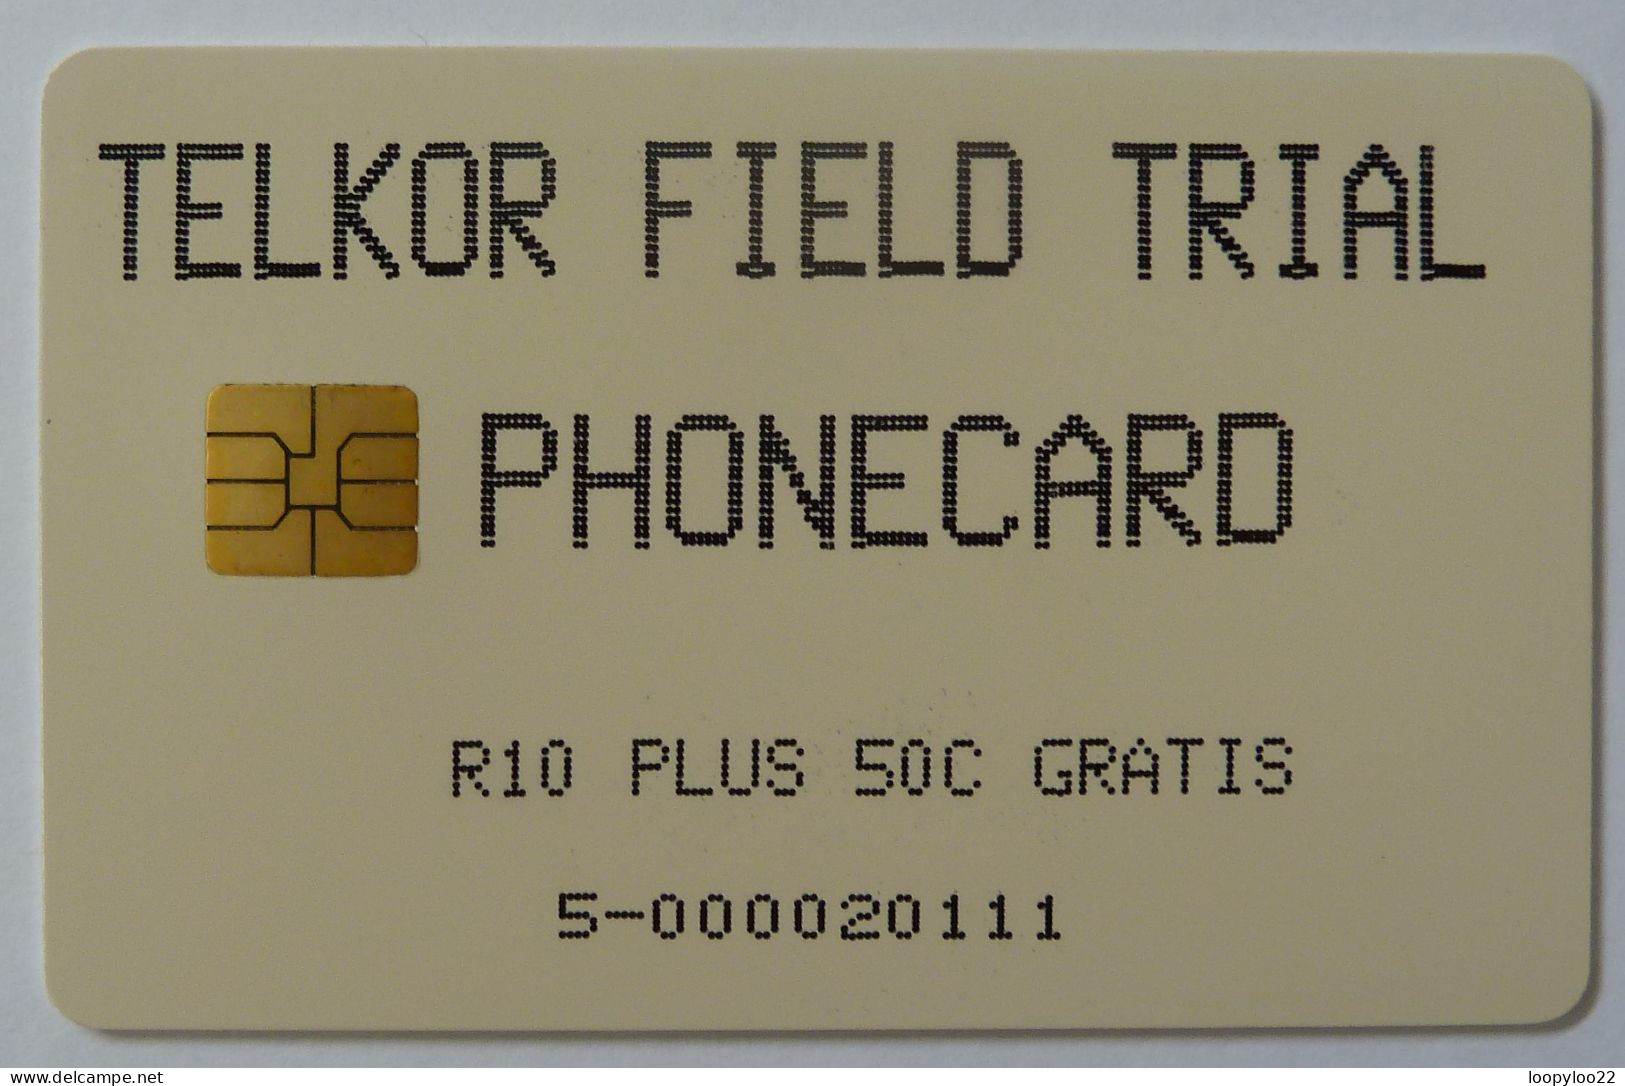 SOUTH AFRICA - Telkor Field Trial - R10 PLus 50c Gratis - 100ex - RRR - Afrique Du Sud